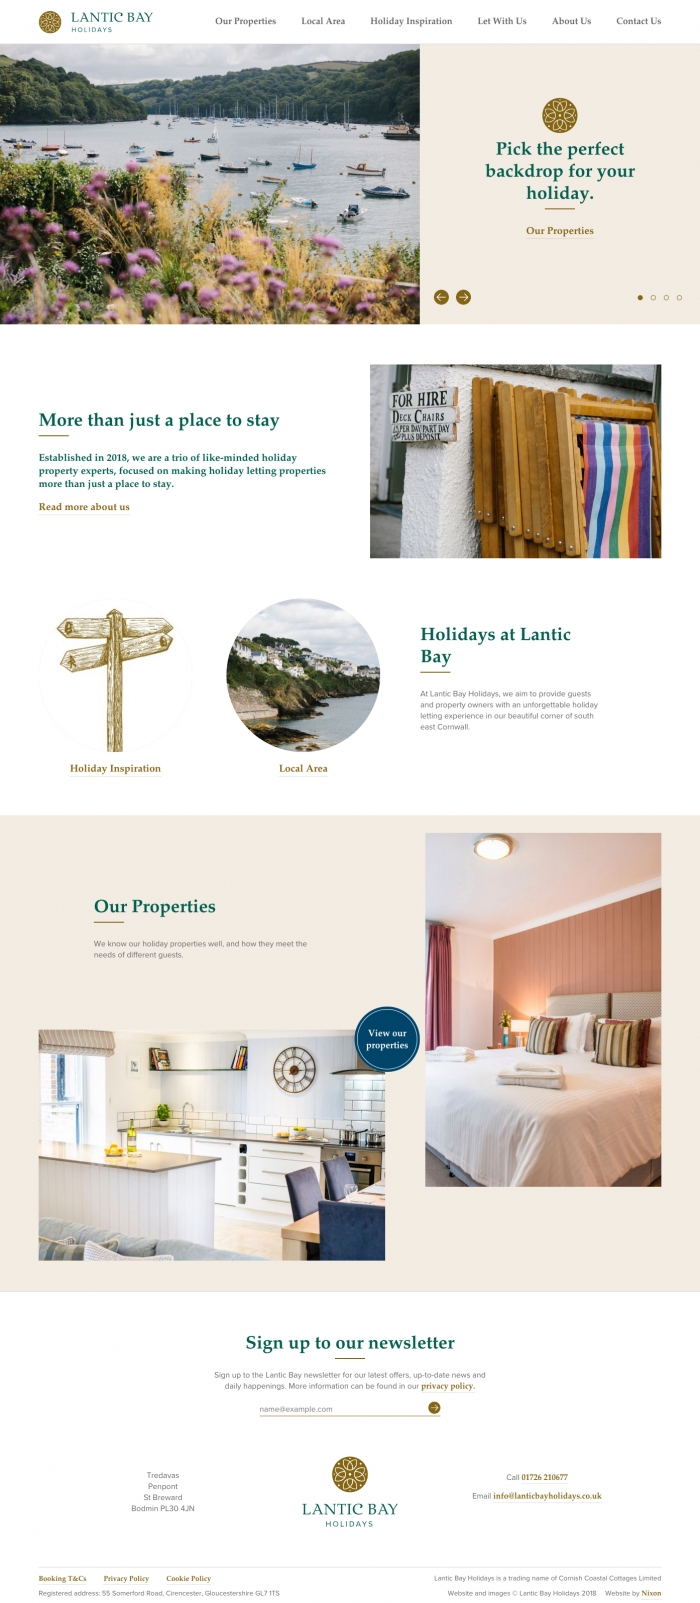 Lantic Bay Holidays website created by Nixon Design, Cornwall